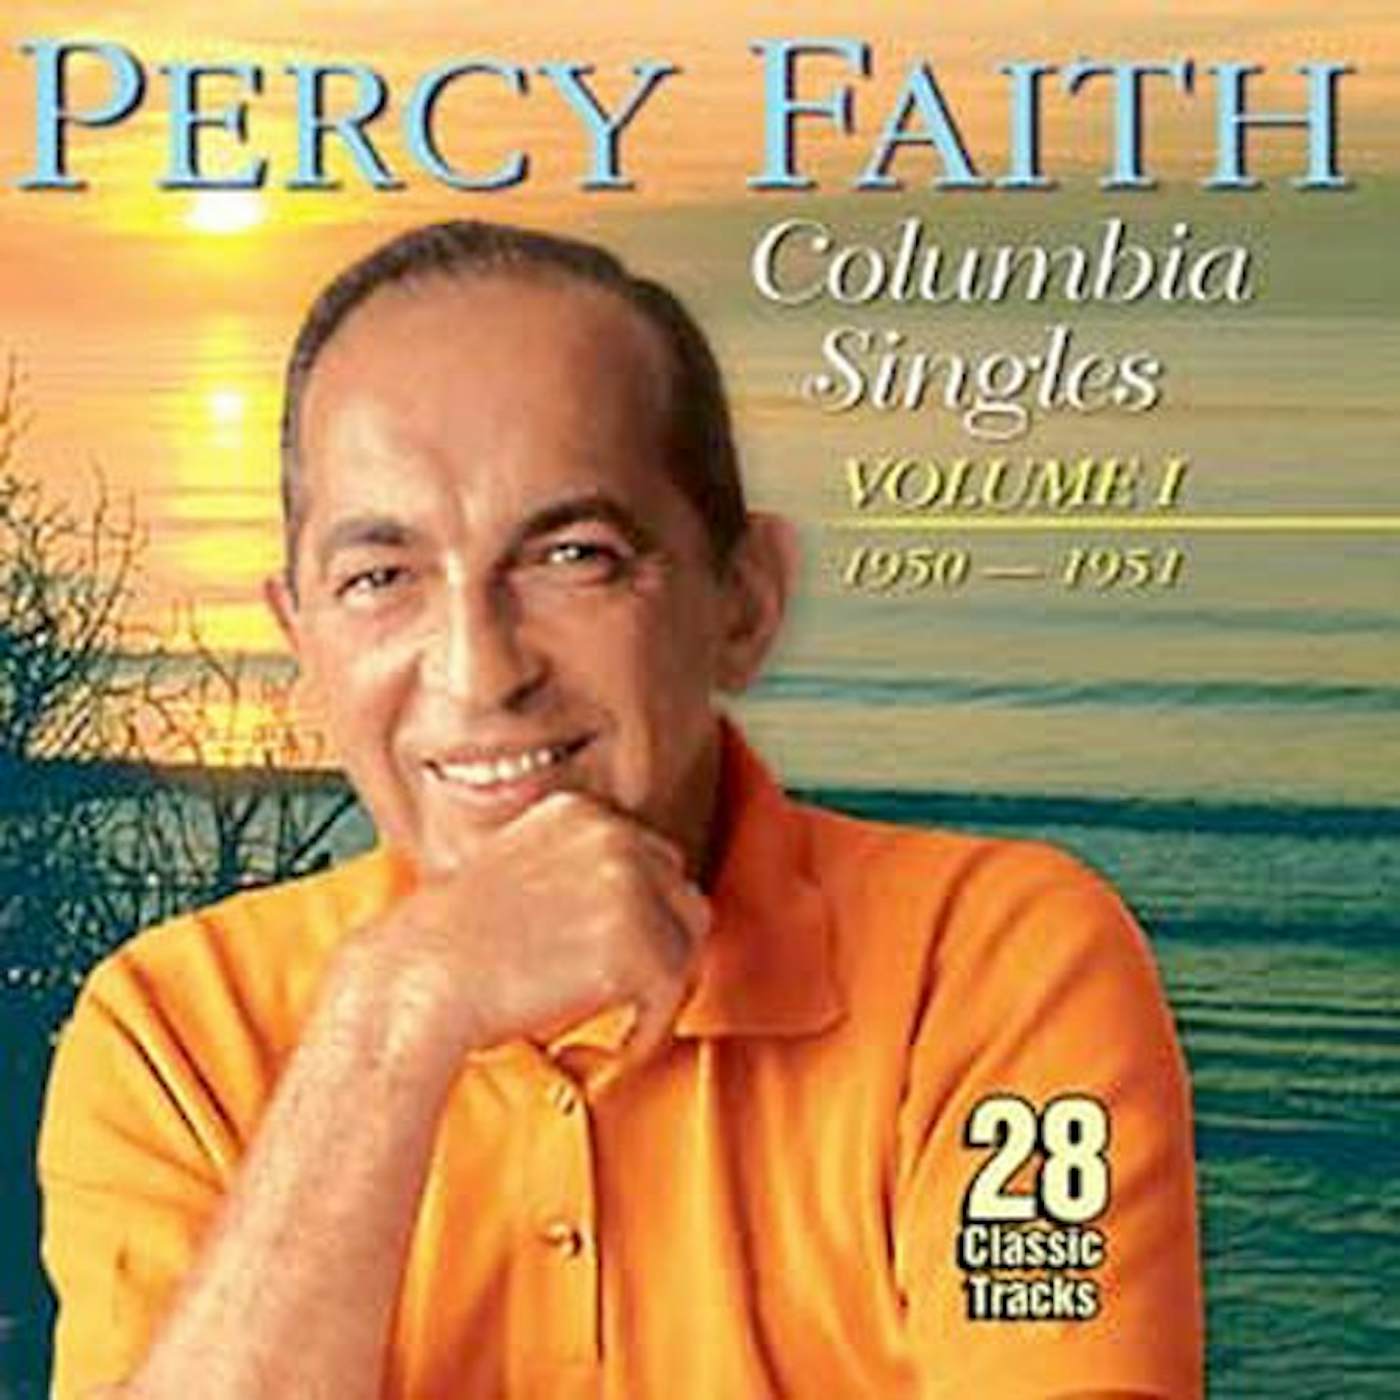 Percy Faith COLUMBIA SINGLES VOL 1: 50 - 51 CD